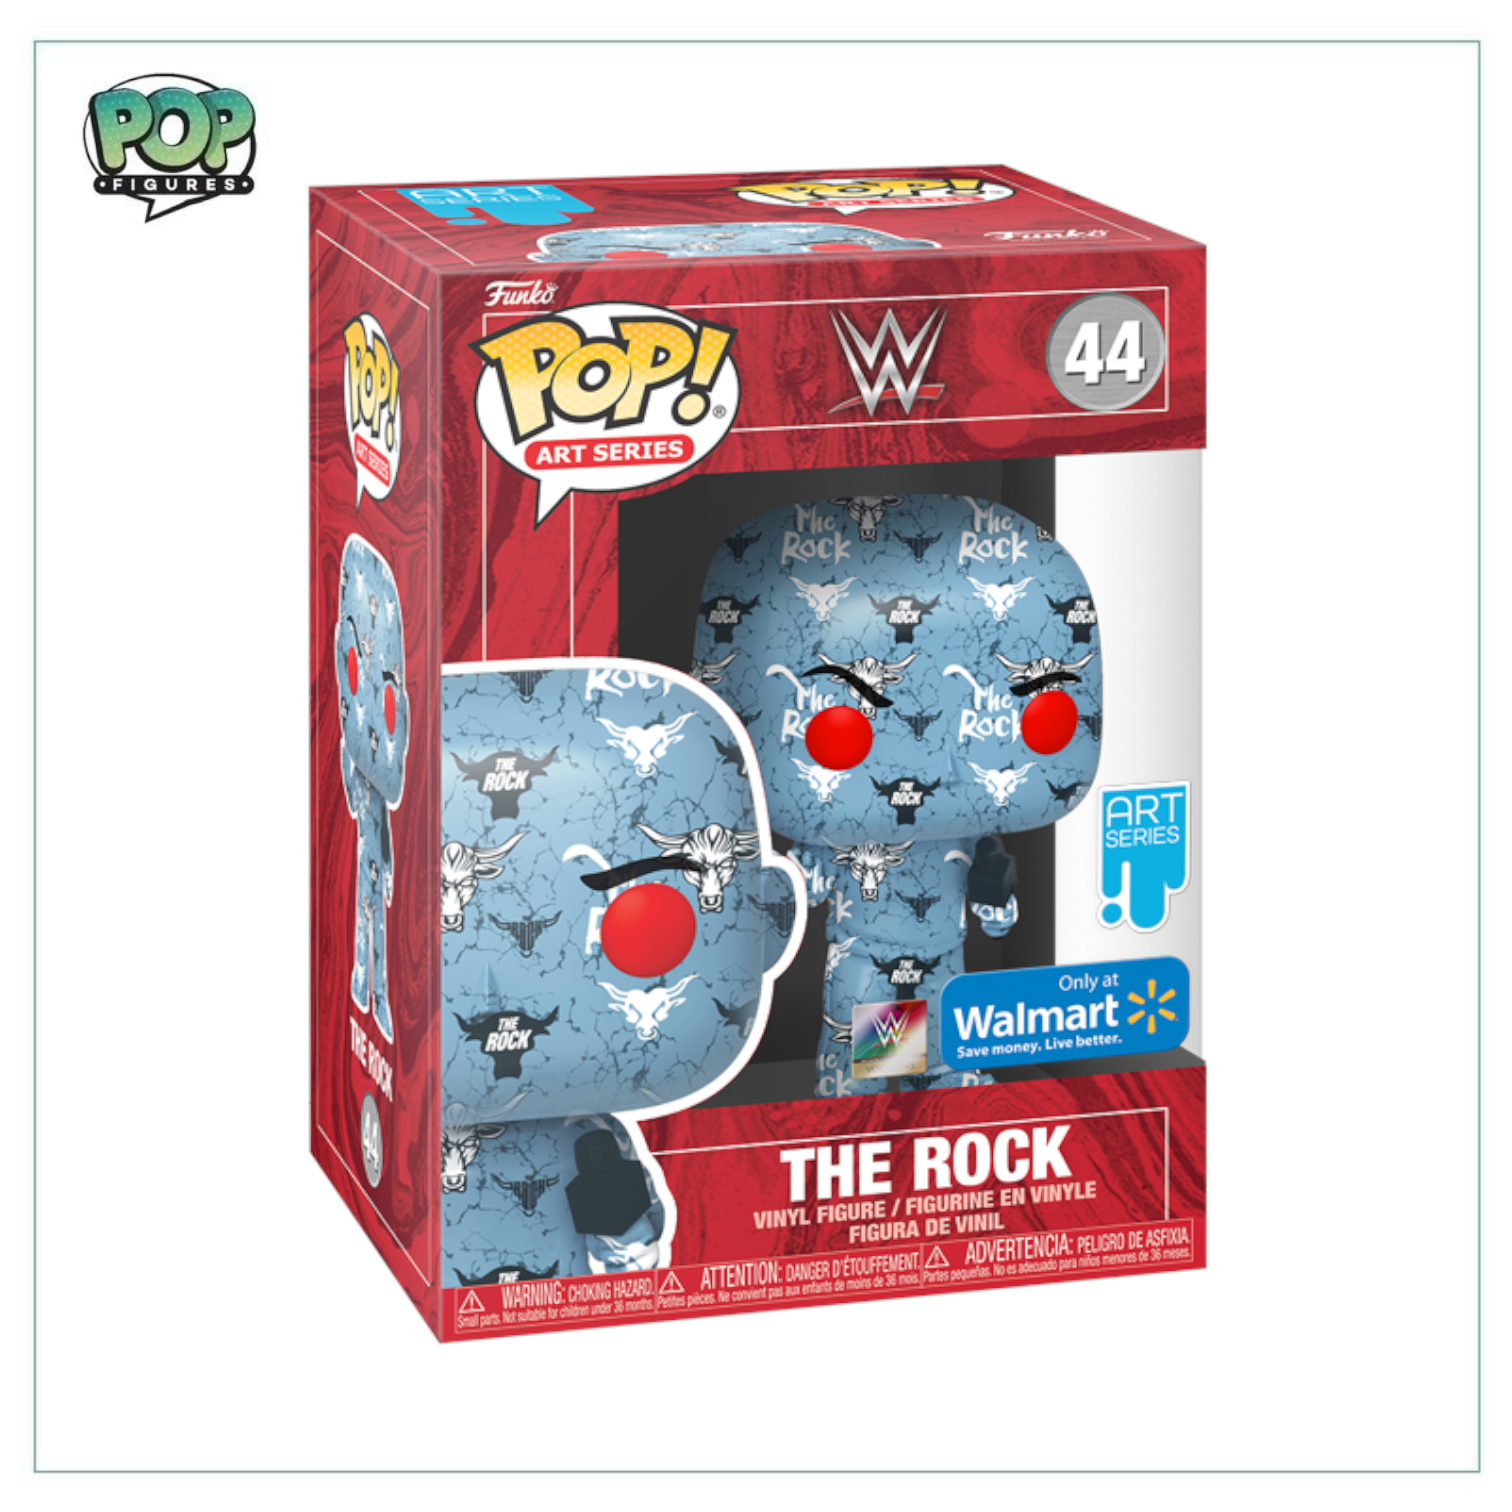 The Rock #44 (Artist Series) Funko Pop! - WWE - Walmart Exclusive